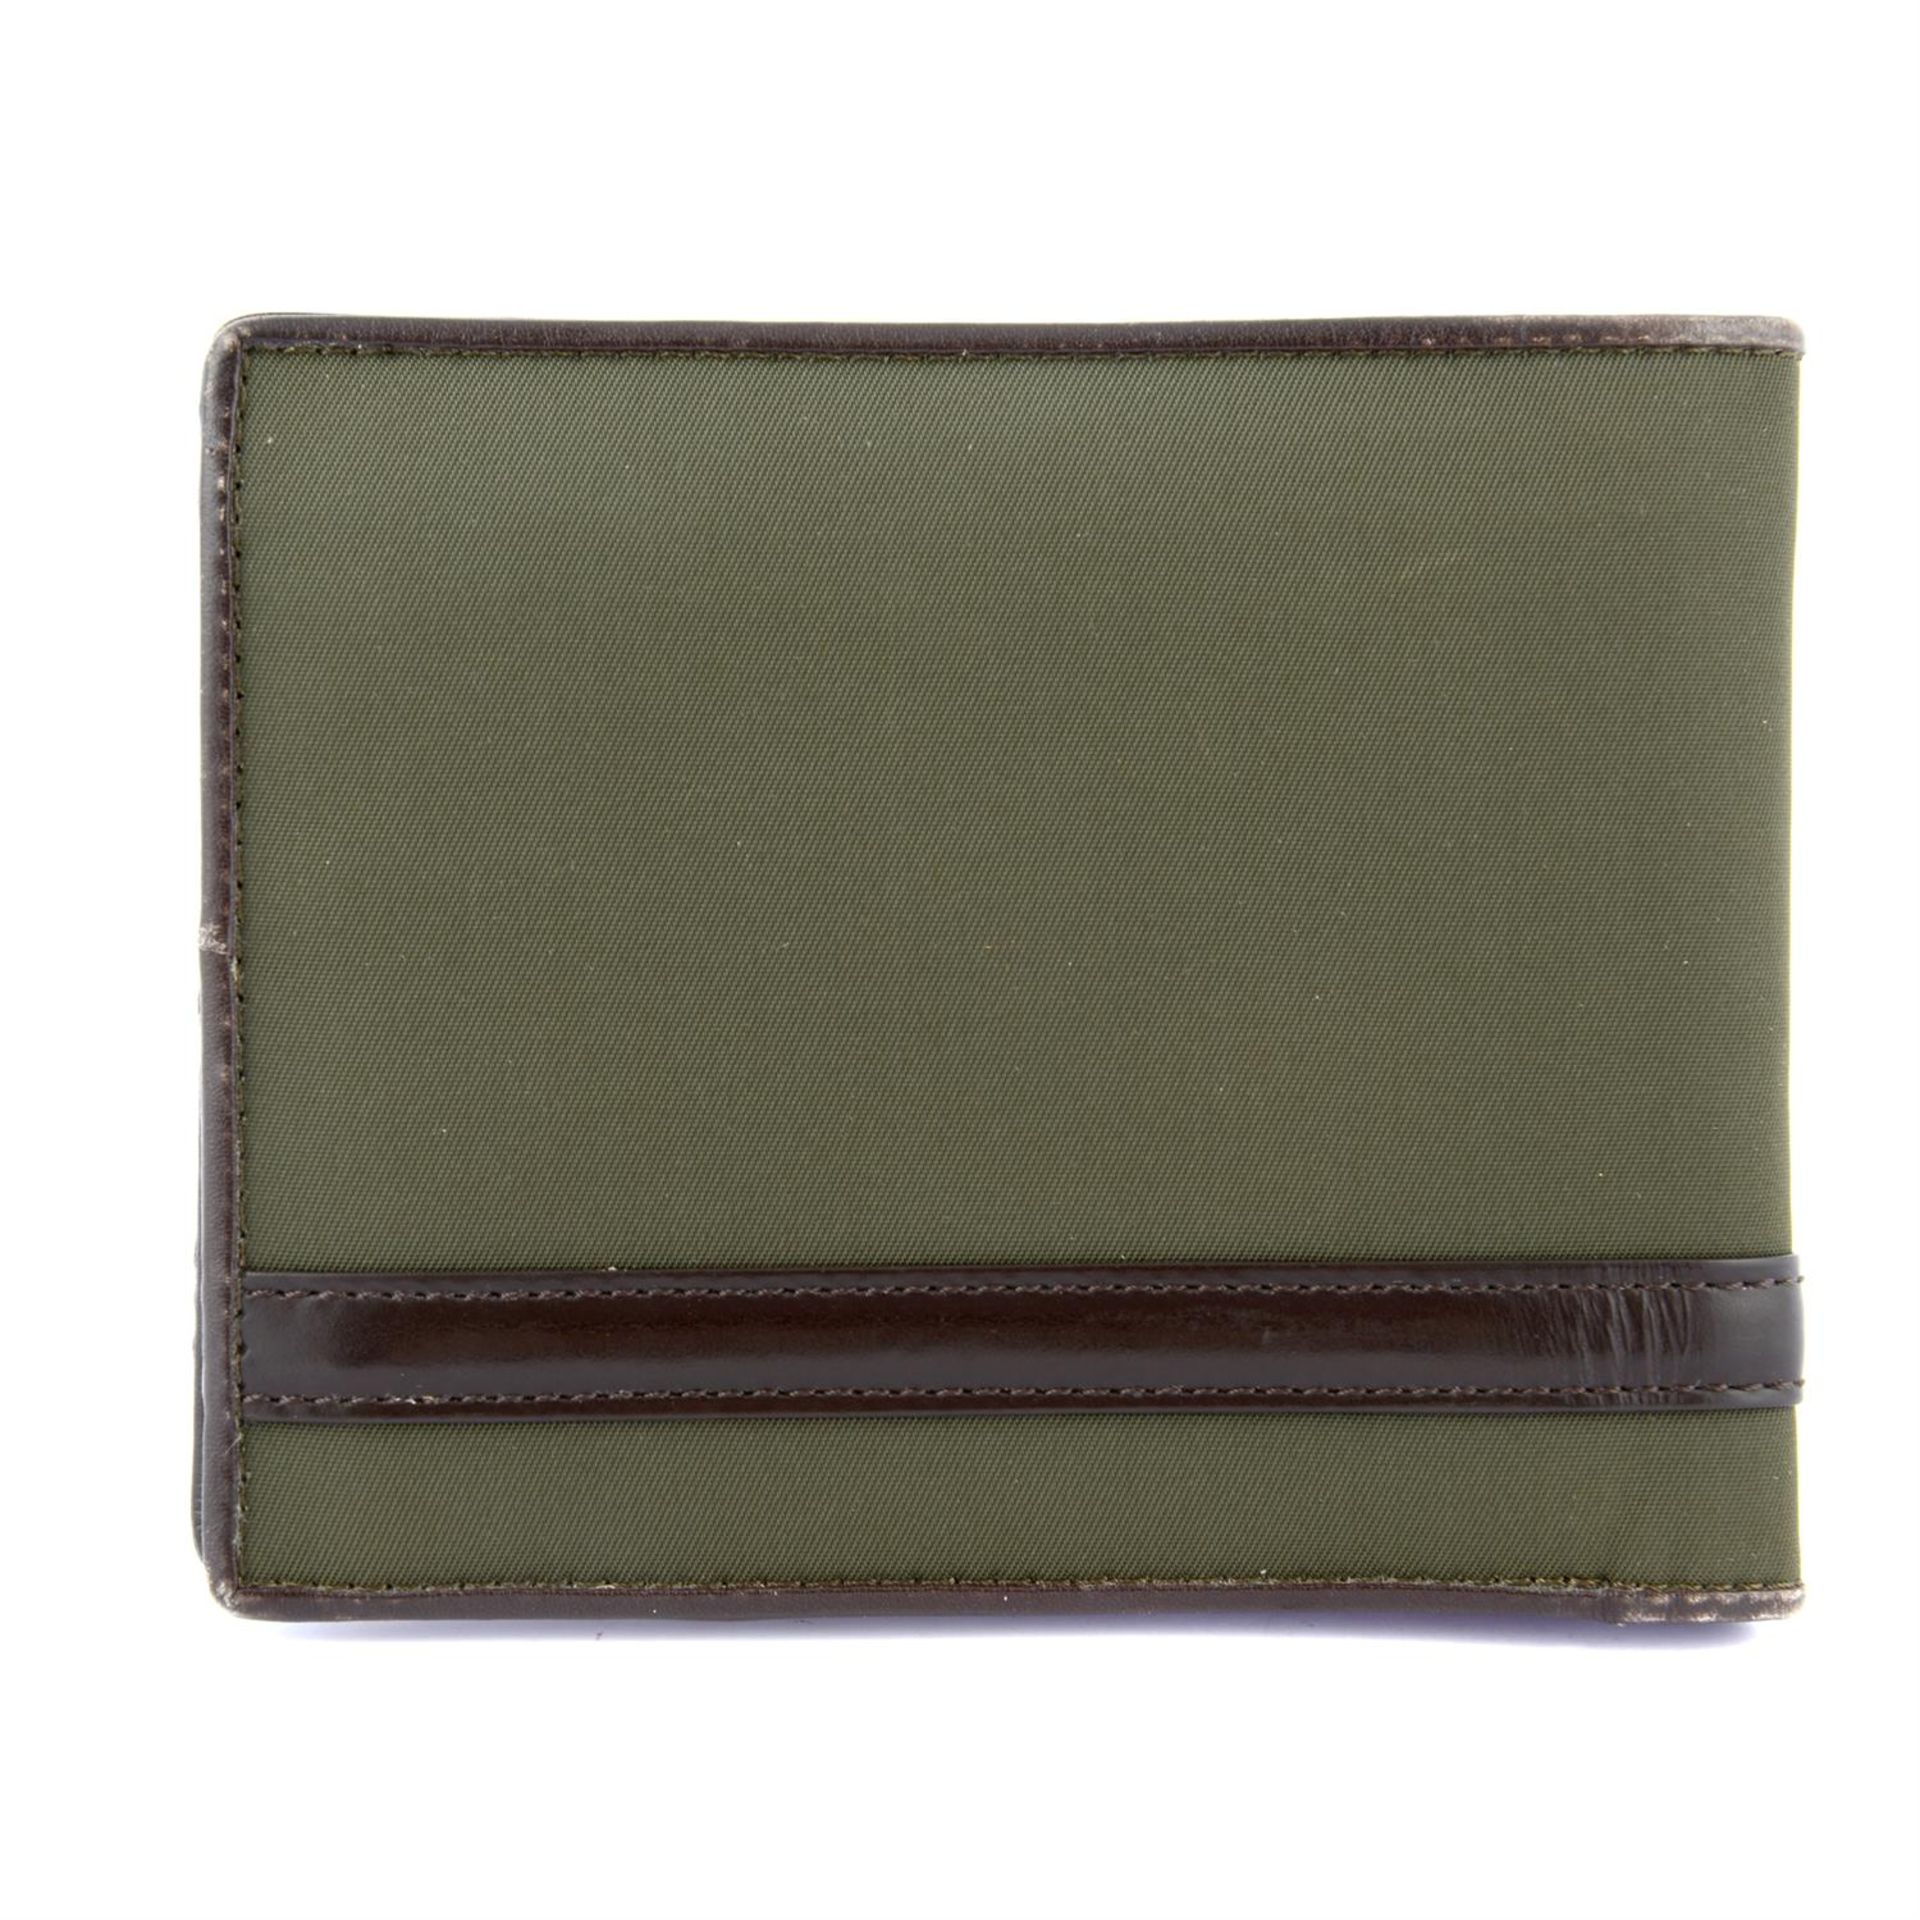 BURBERRY - a khaki green Bifold Wallet. - Image 2 of 3